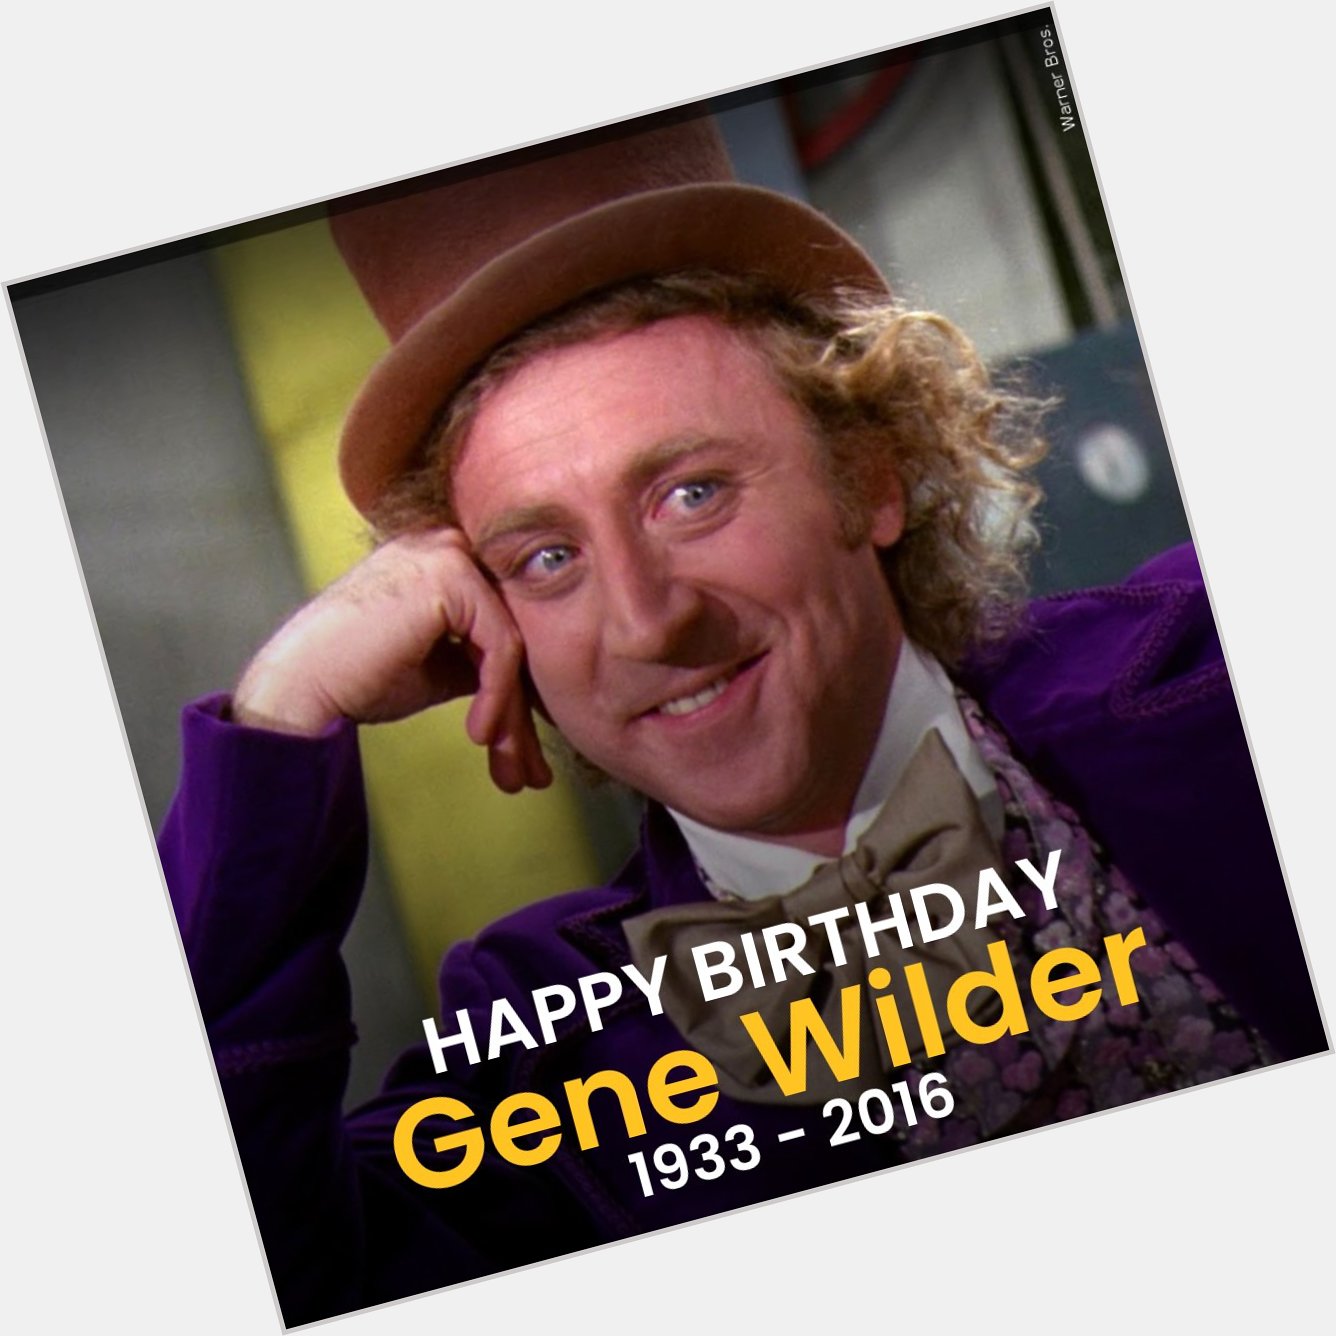 Happy Birthday, Gene Wilder 